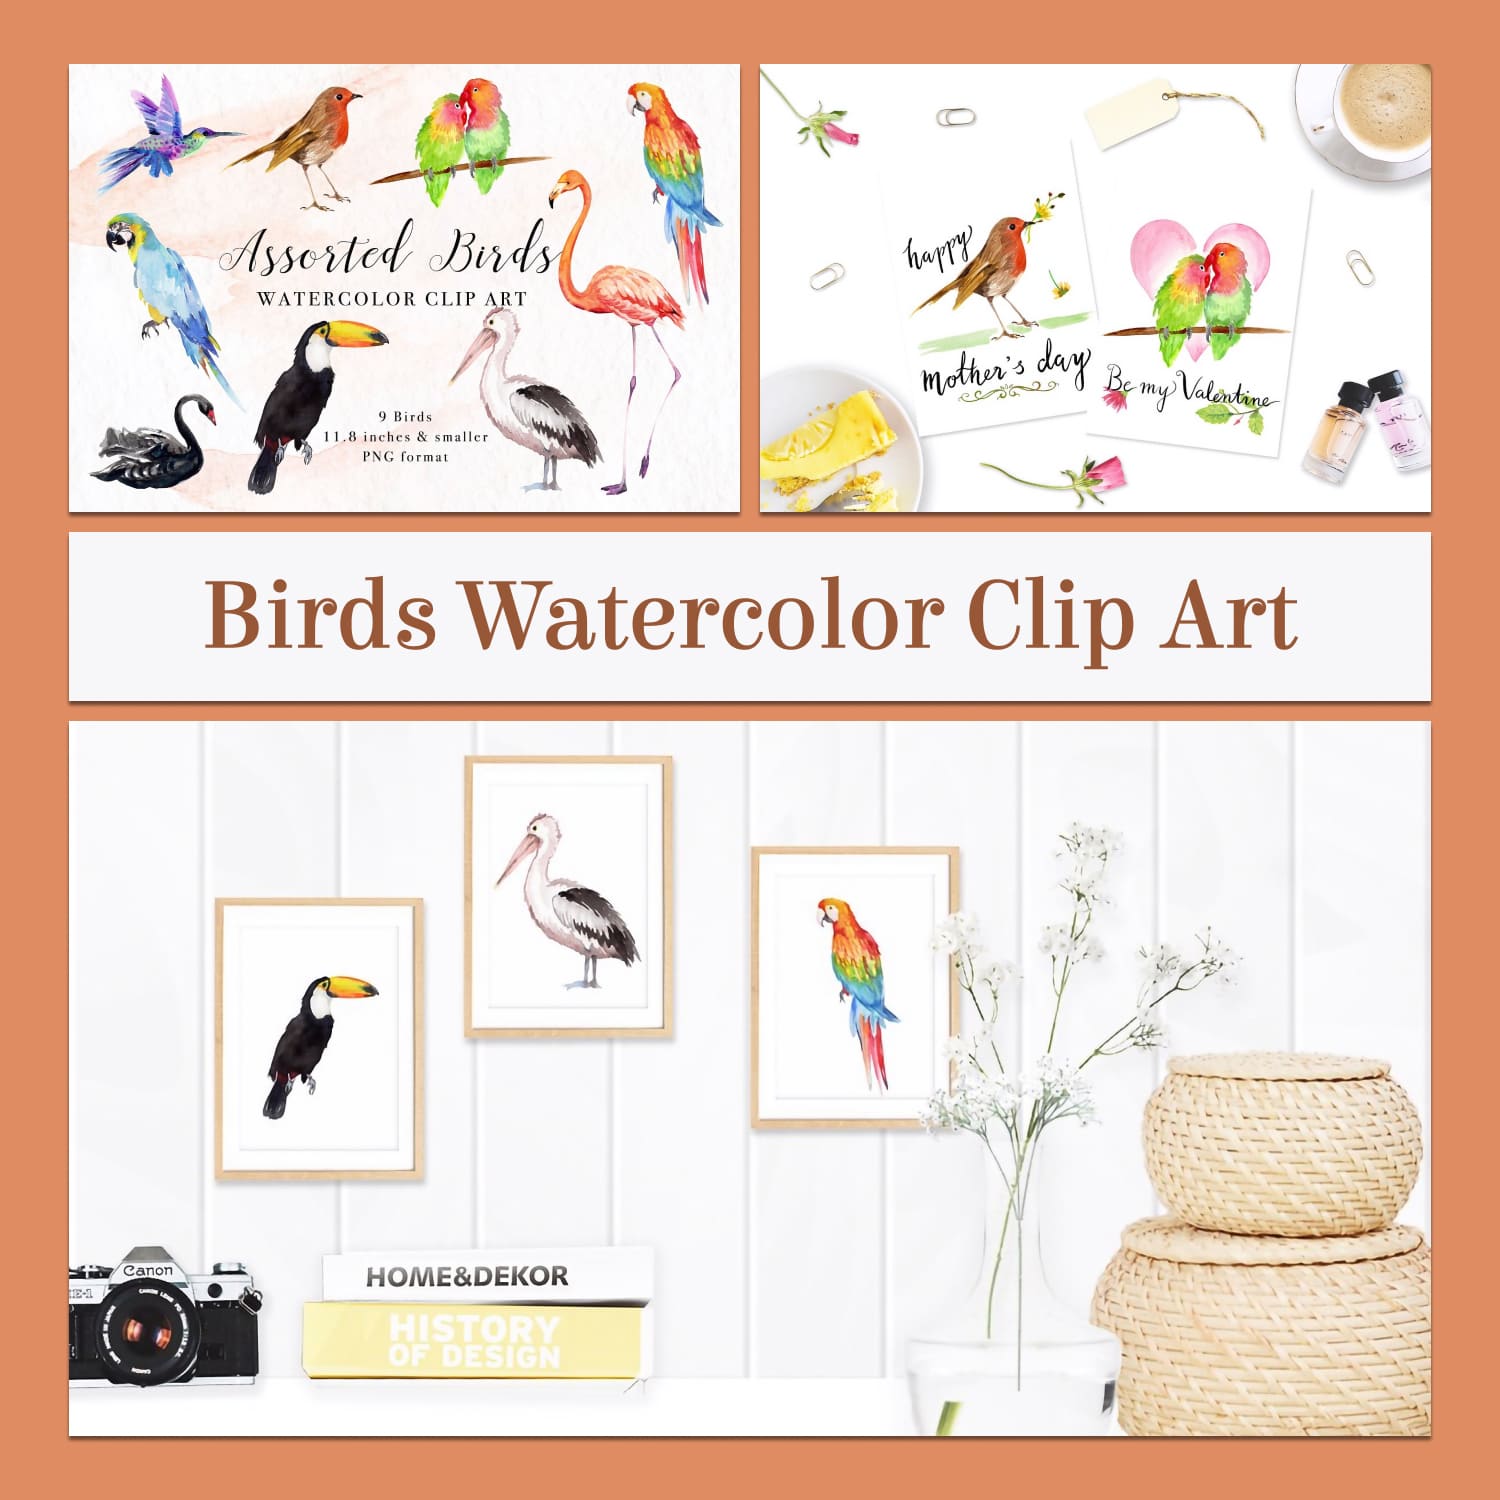 Birds watercolor clip art - main image preview.